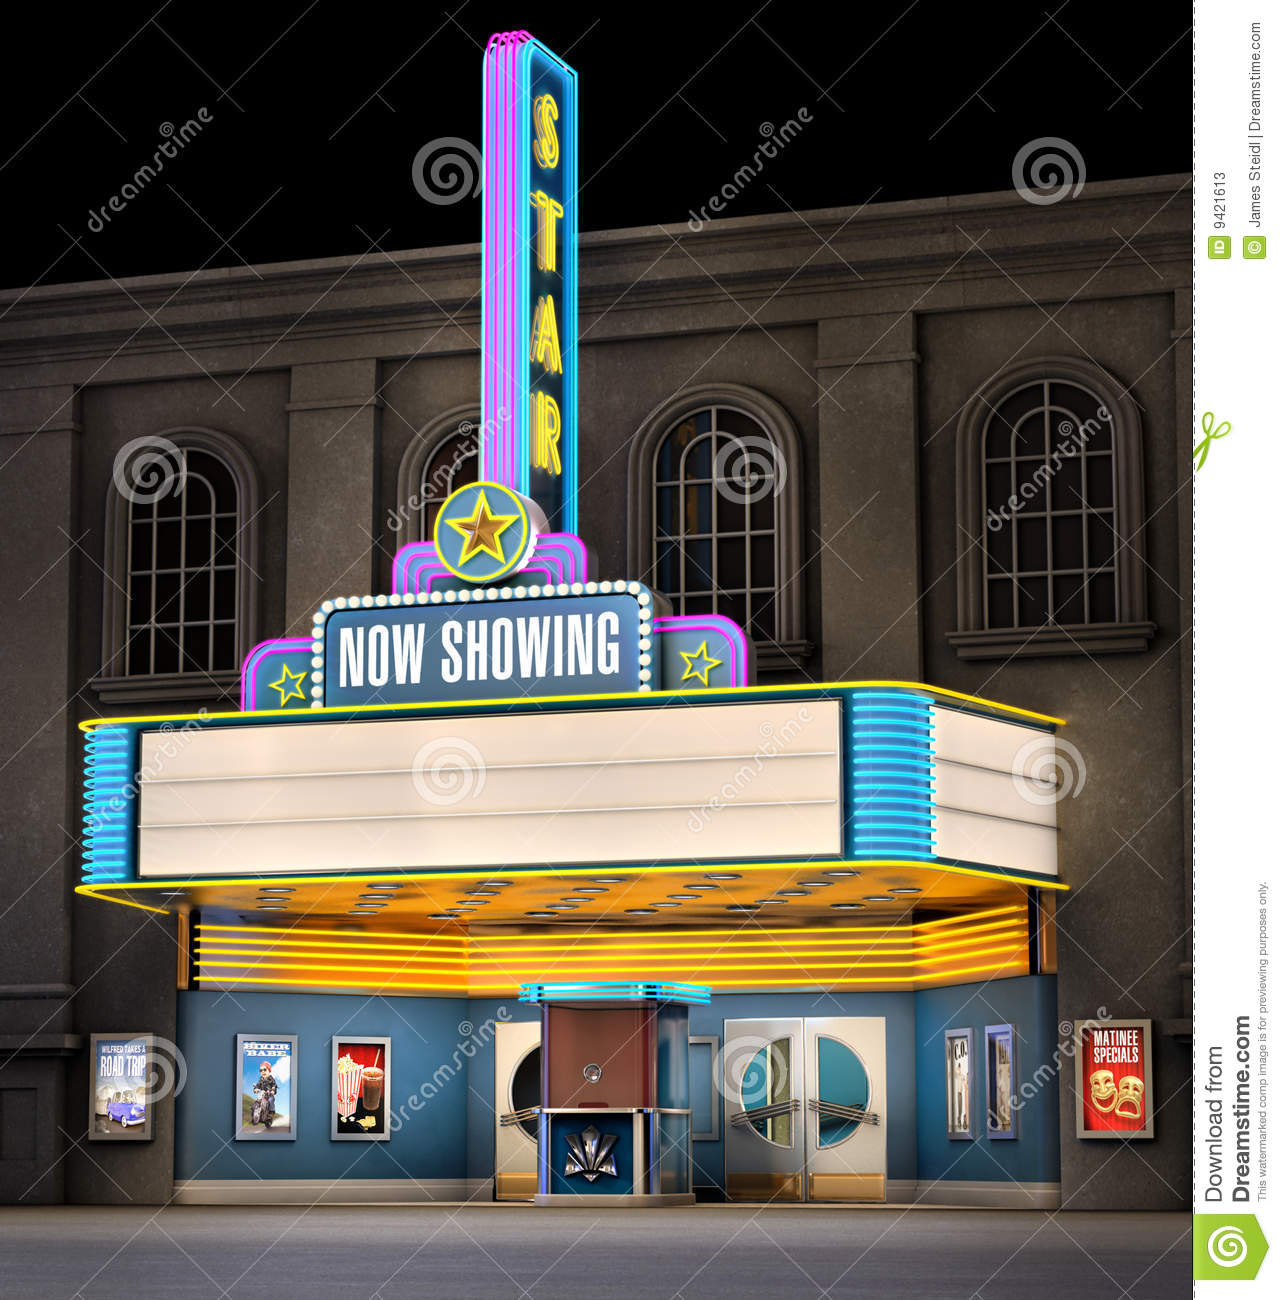 Exterior Night Shot Of A Retro Illuminated Neon Movie Theater